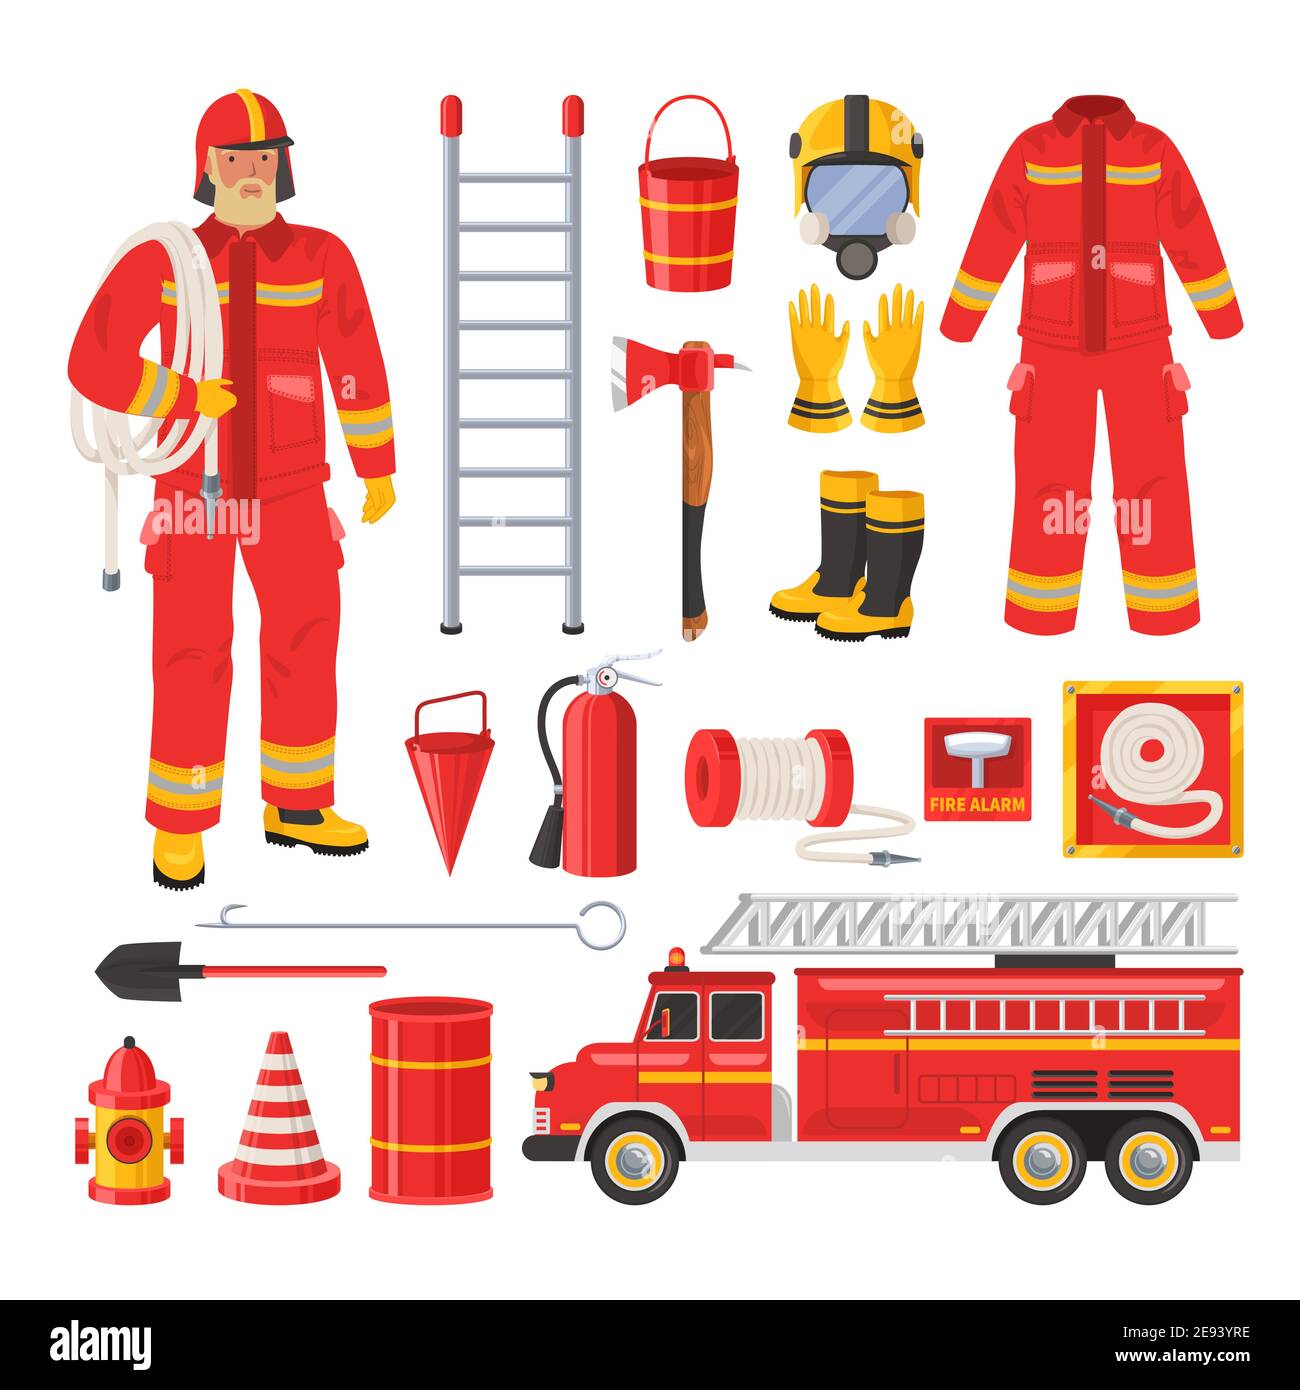 Feuerwehr Ausrüstung legen. Vektor-Illustration Stock-Vektorgrafik - Alamy